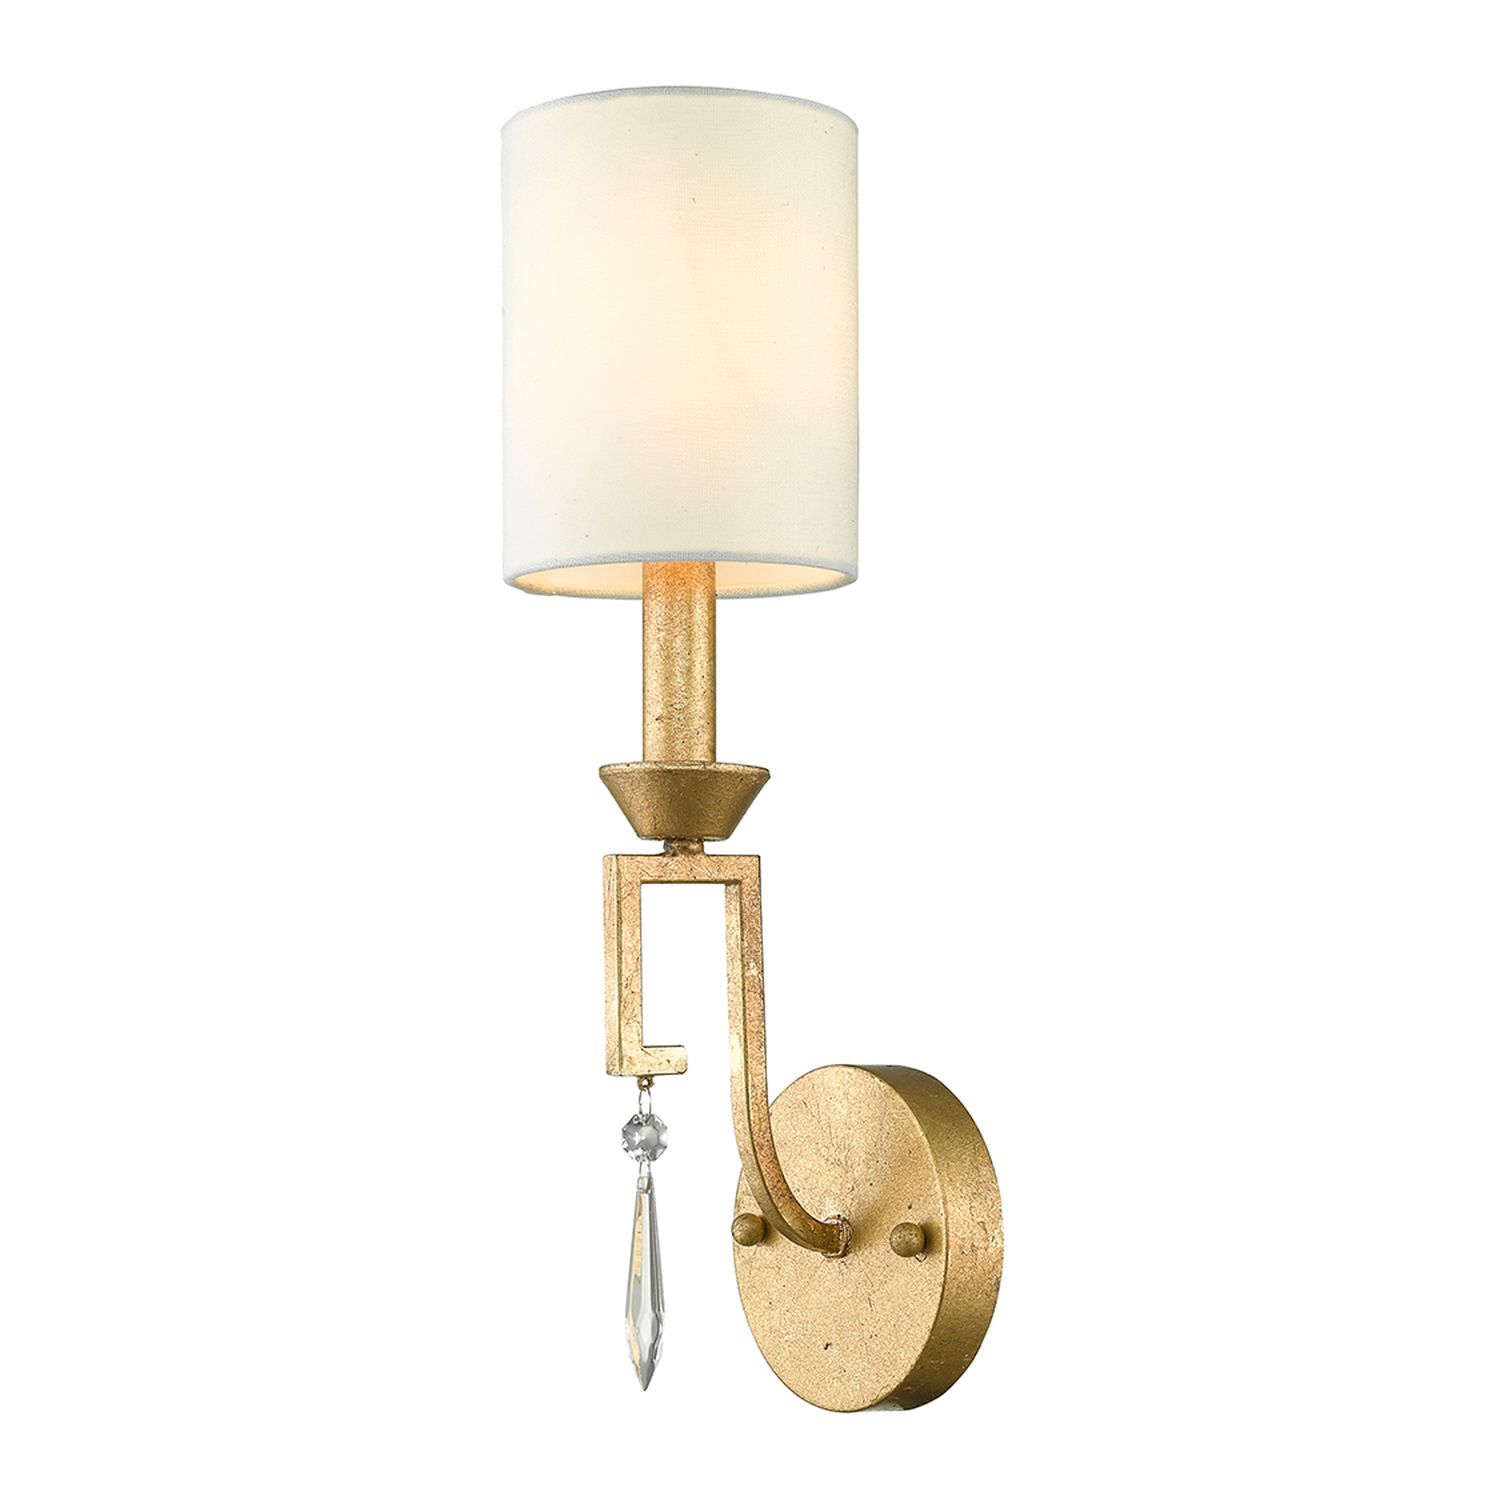 Vintage Wandlampe AIROSO Gold Weiß H:45cm Lampe